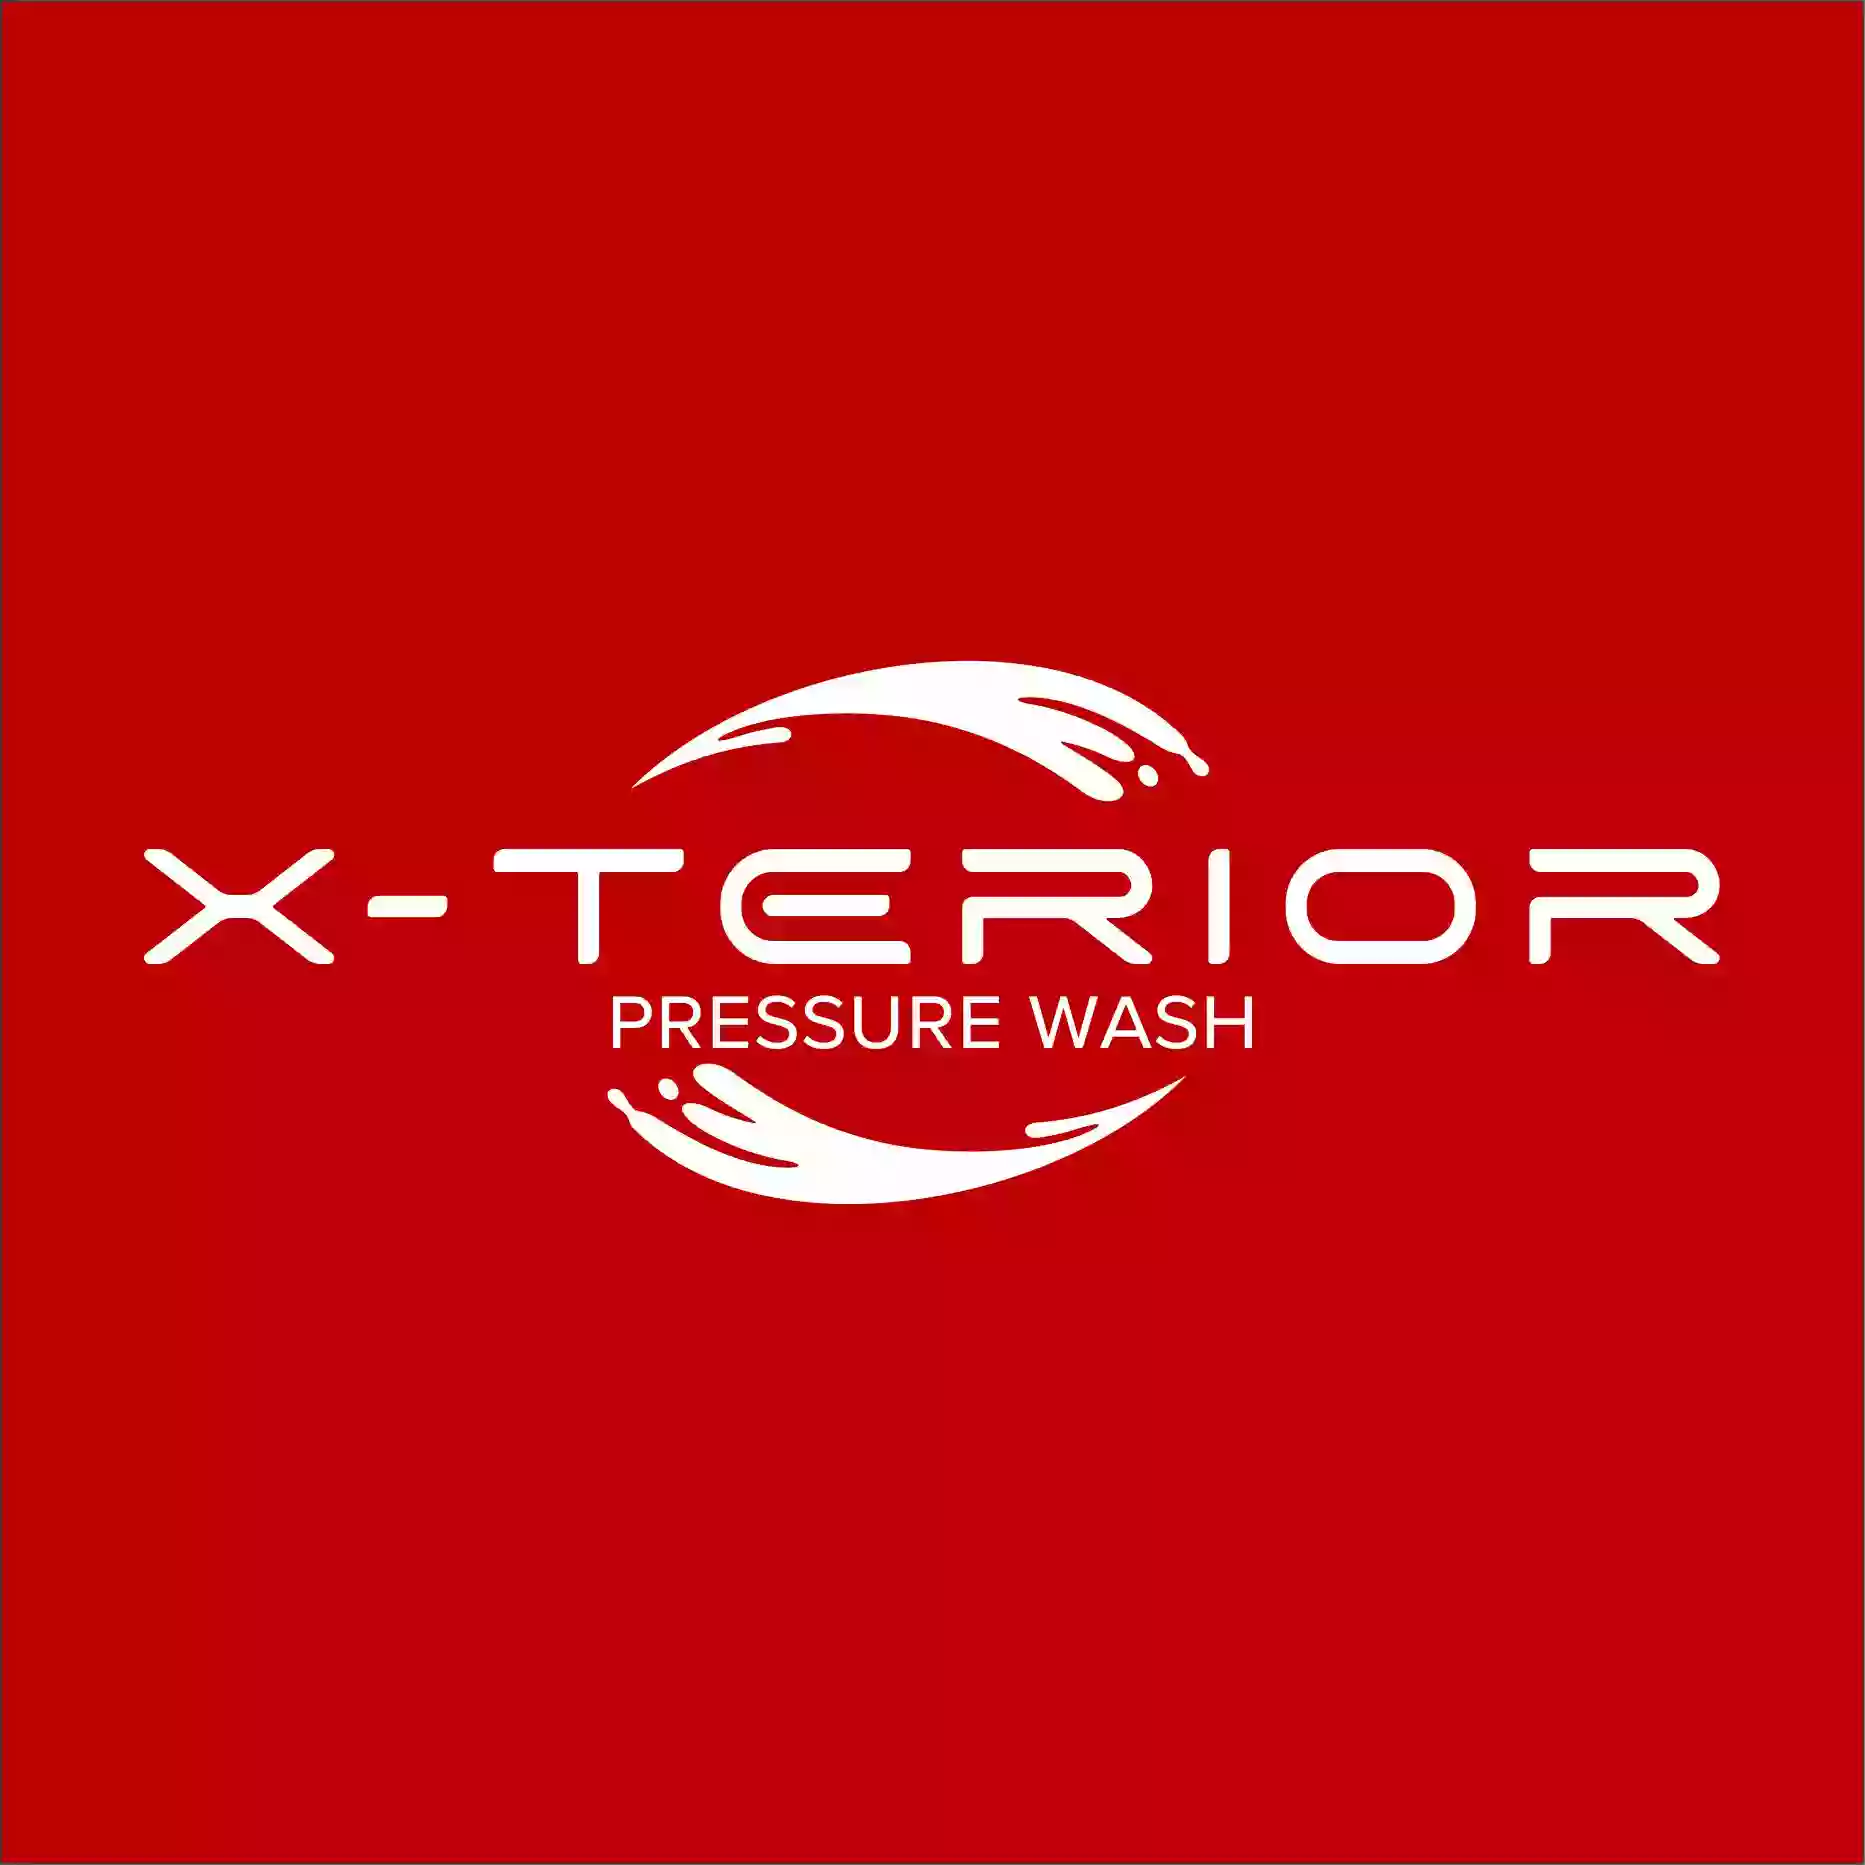 X-terior Pressure Wash